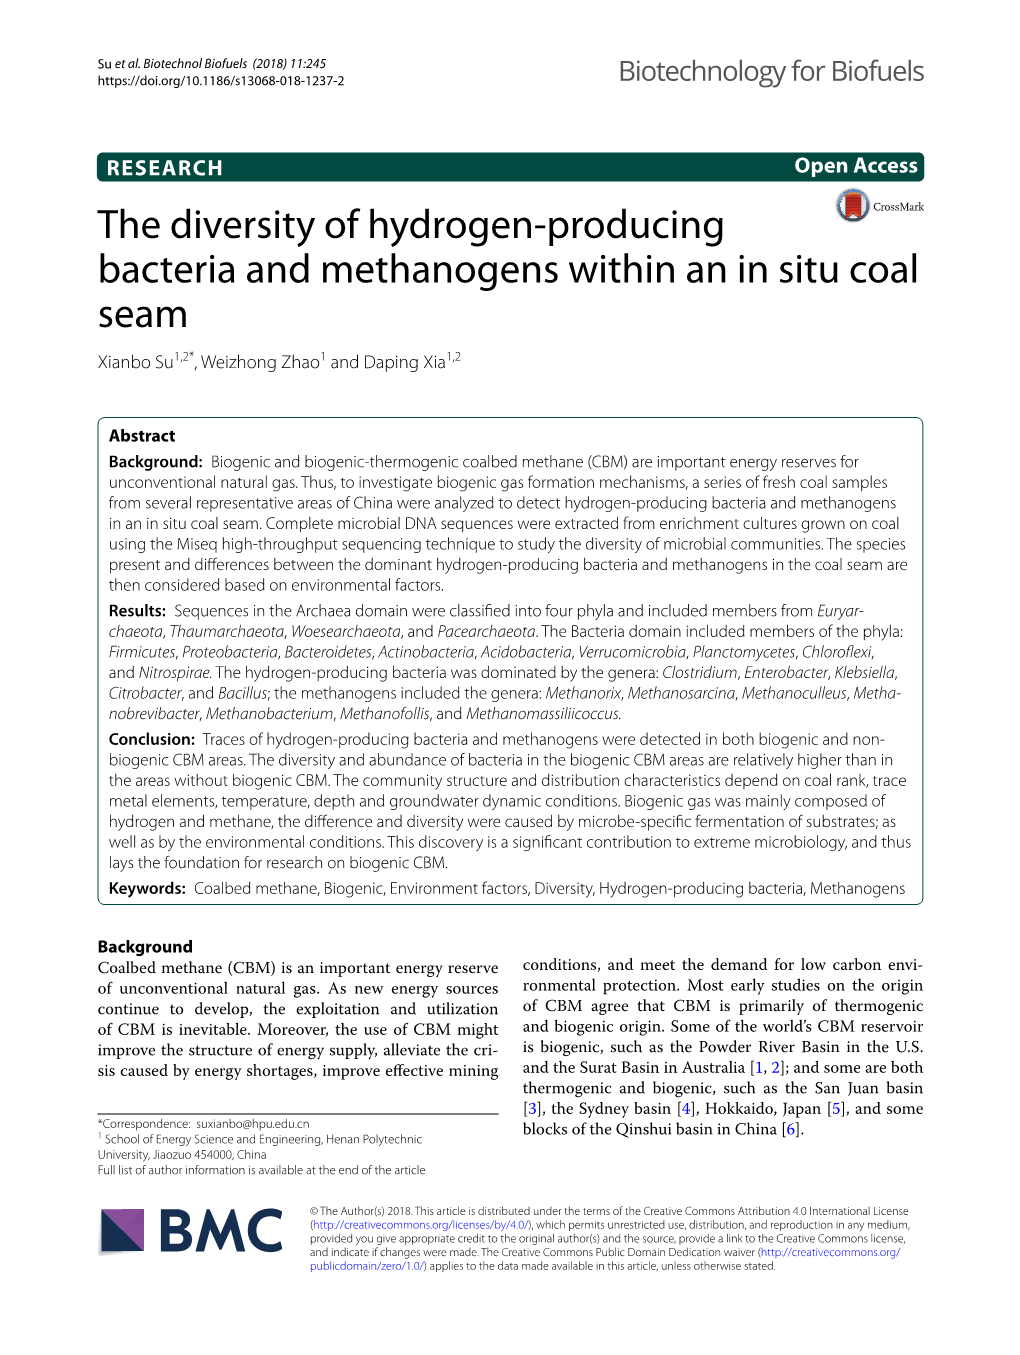 The Diversity of Hydrogen-Producing Bacte- on Average (Range 17,838–94,080; SD = 26,756.6)